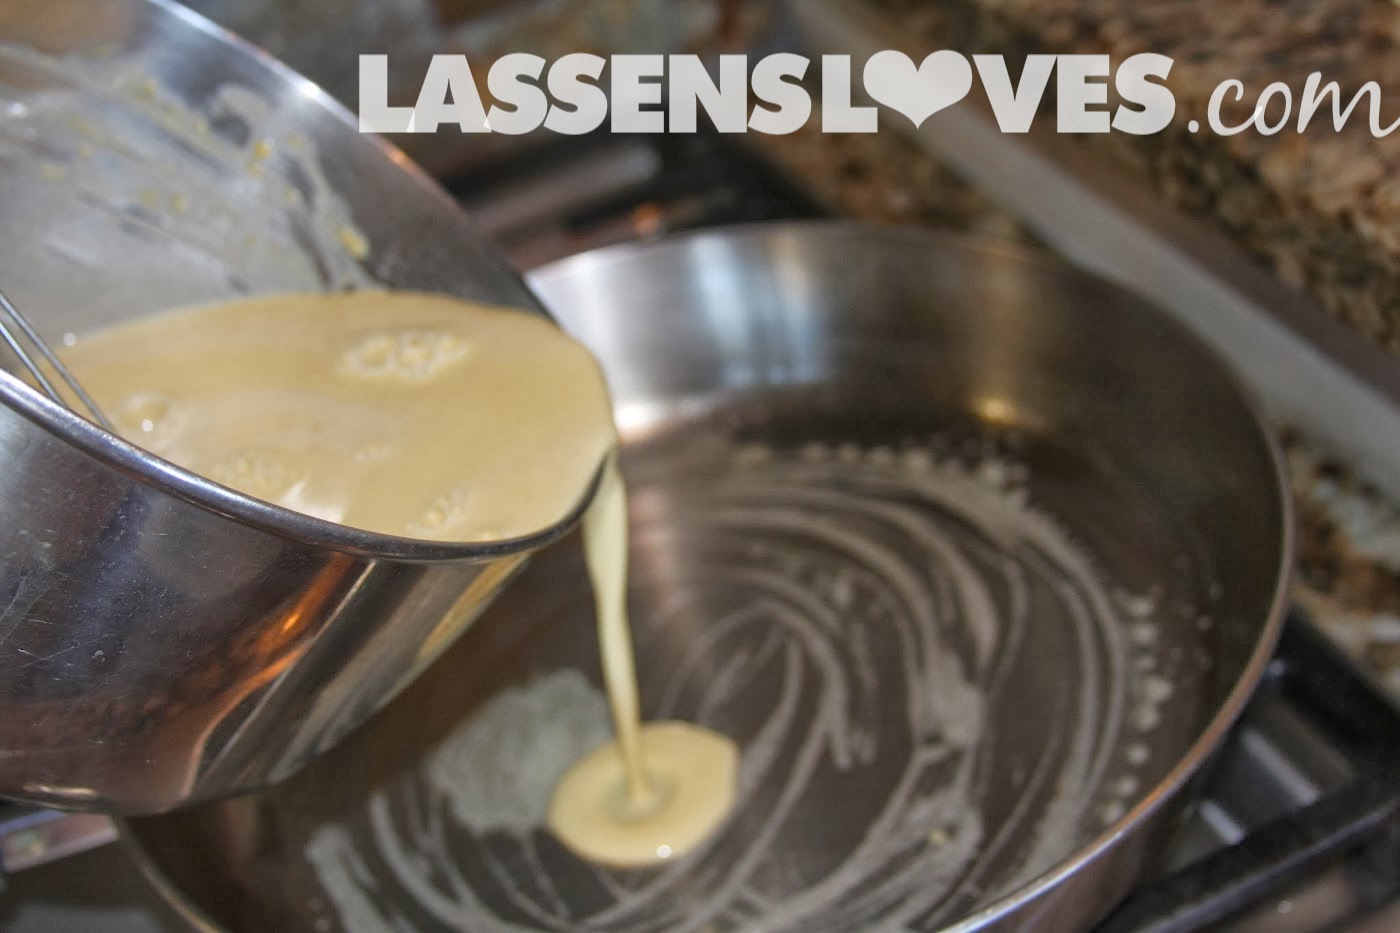 lassensloves.com, Lassen's, Lassens, Danish+Pancakes